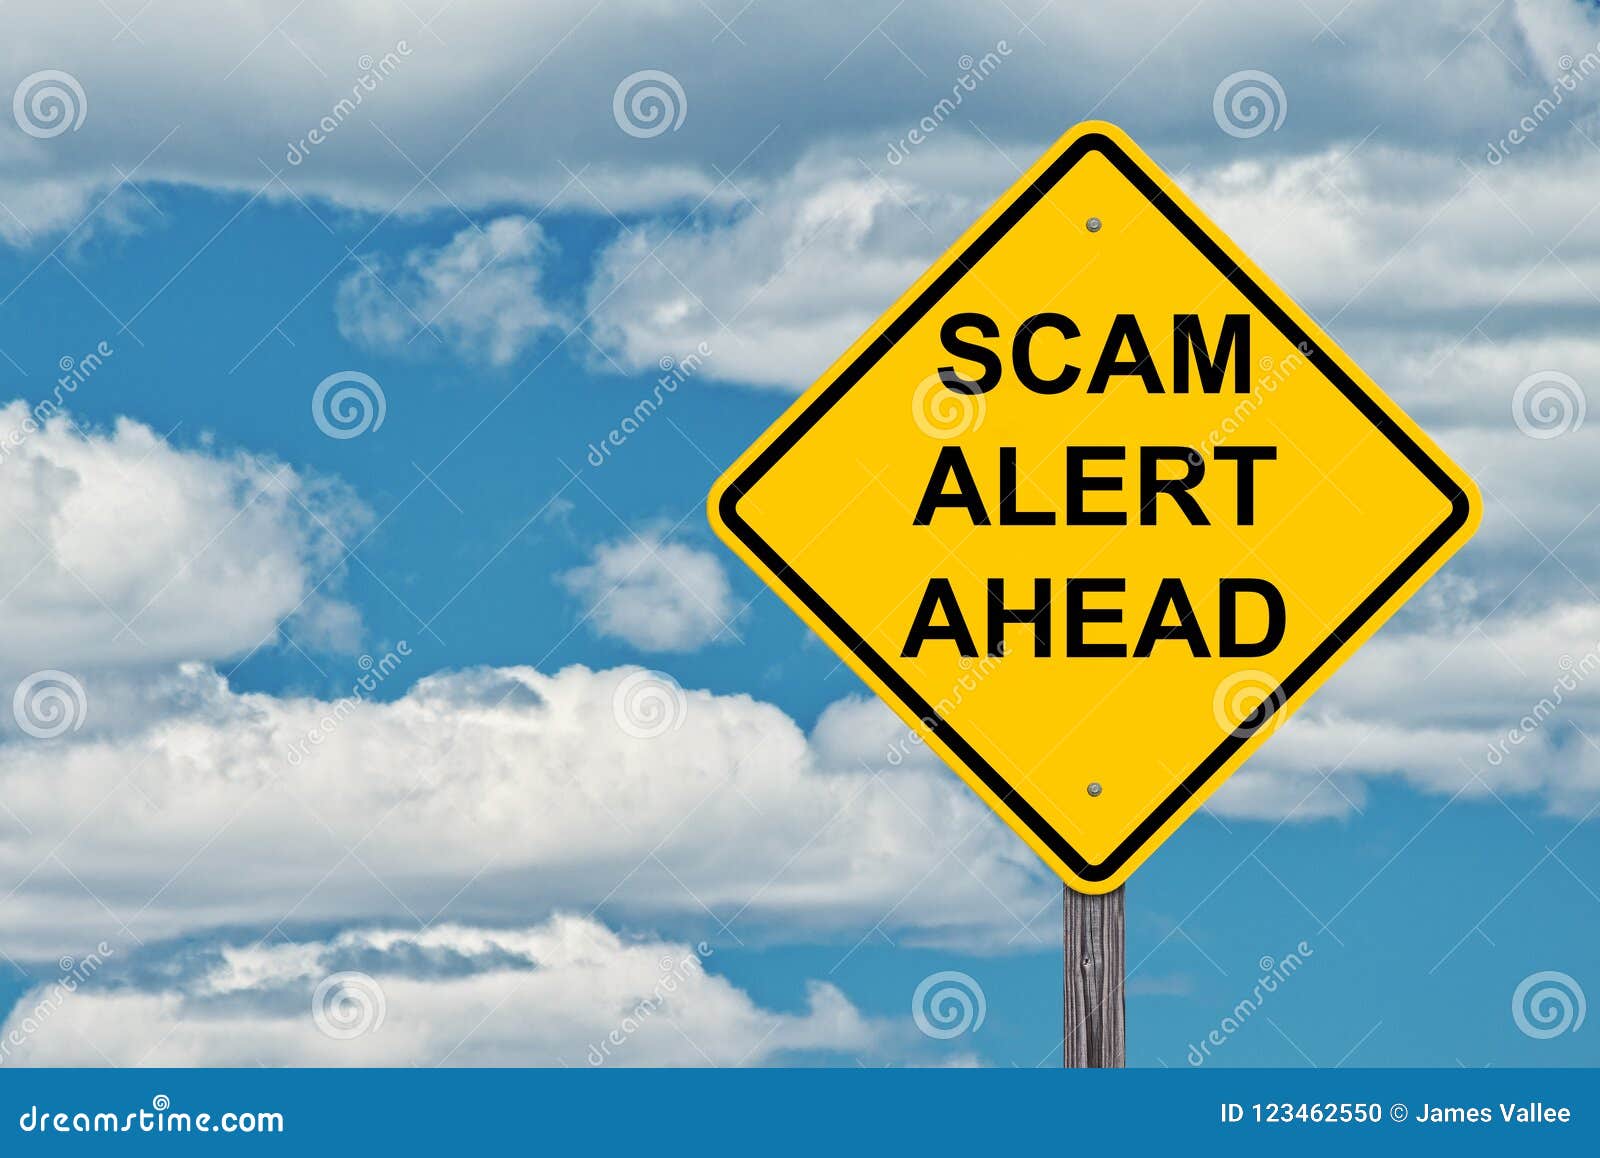 scam alert ahead caution sign